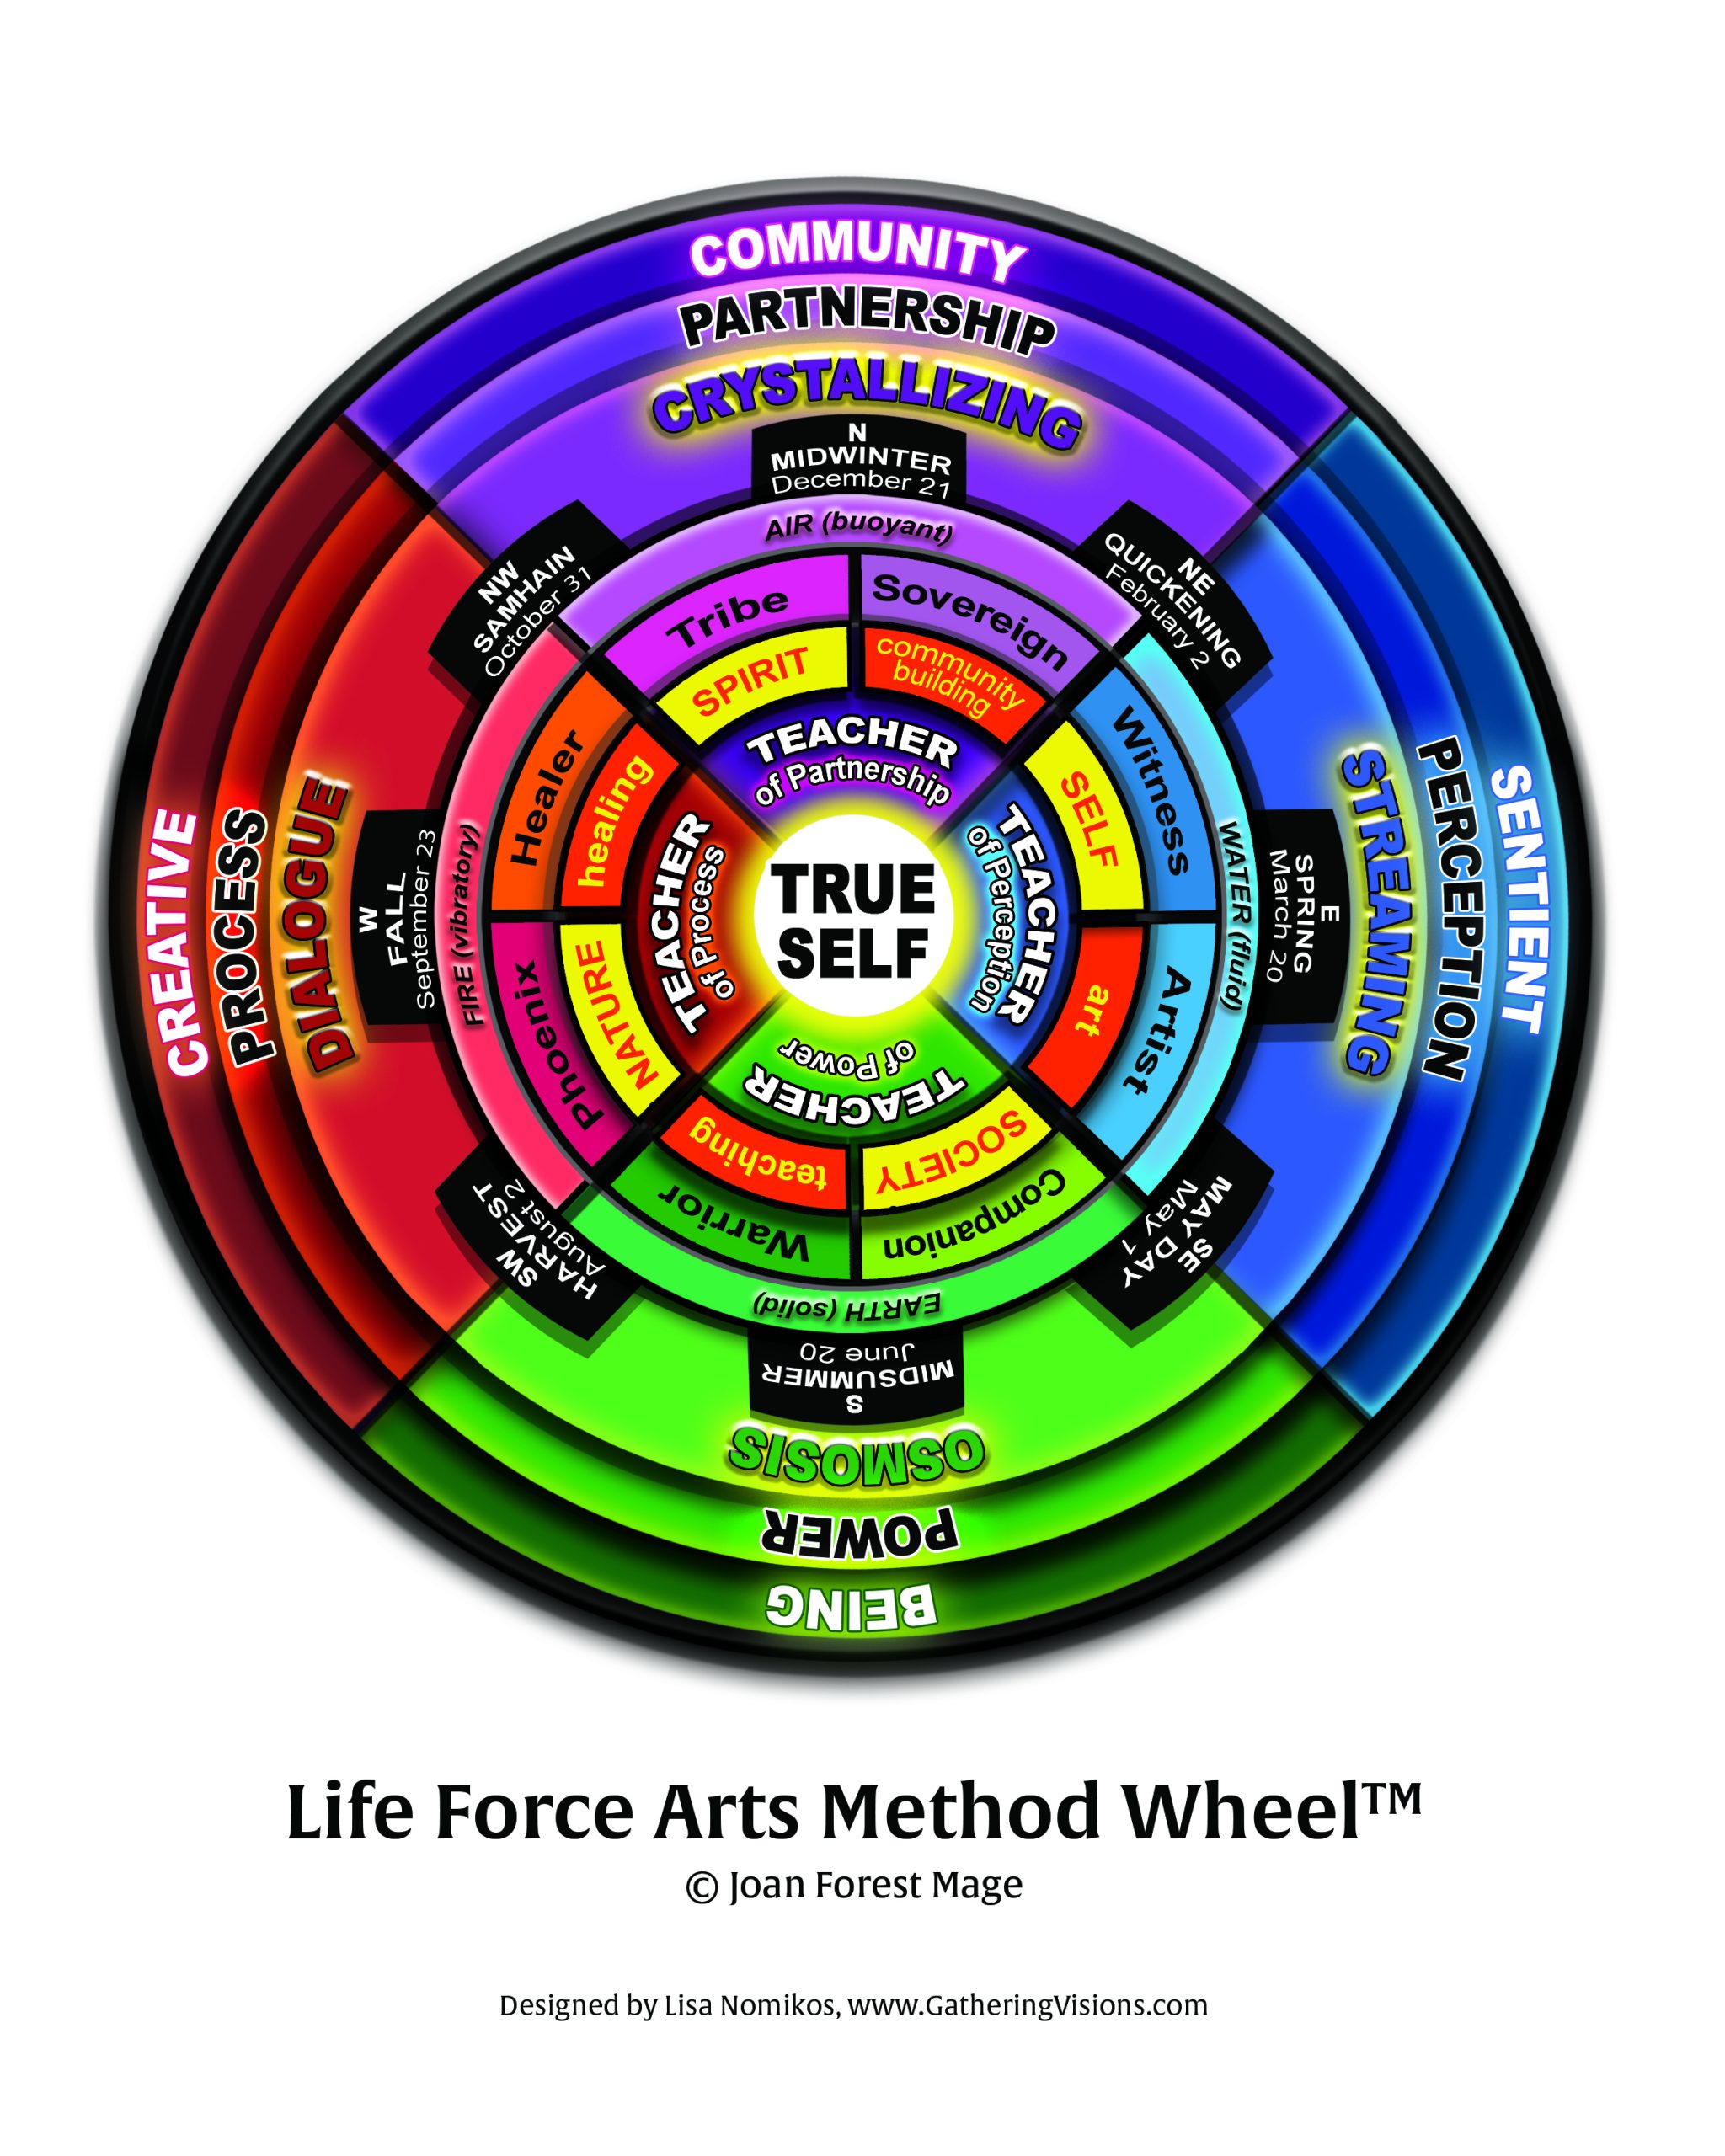 Life Force Arts Method Wheel / © Joan Forest Mage / Designed by Lisa Nomikos